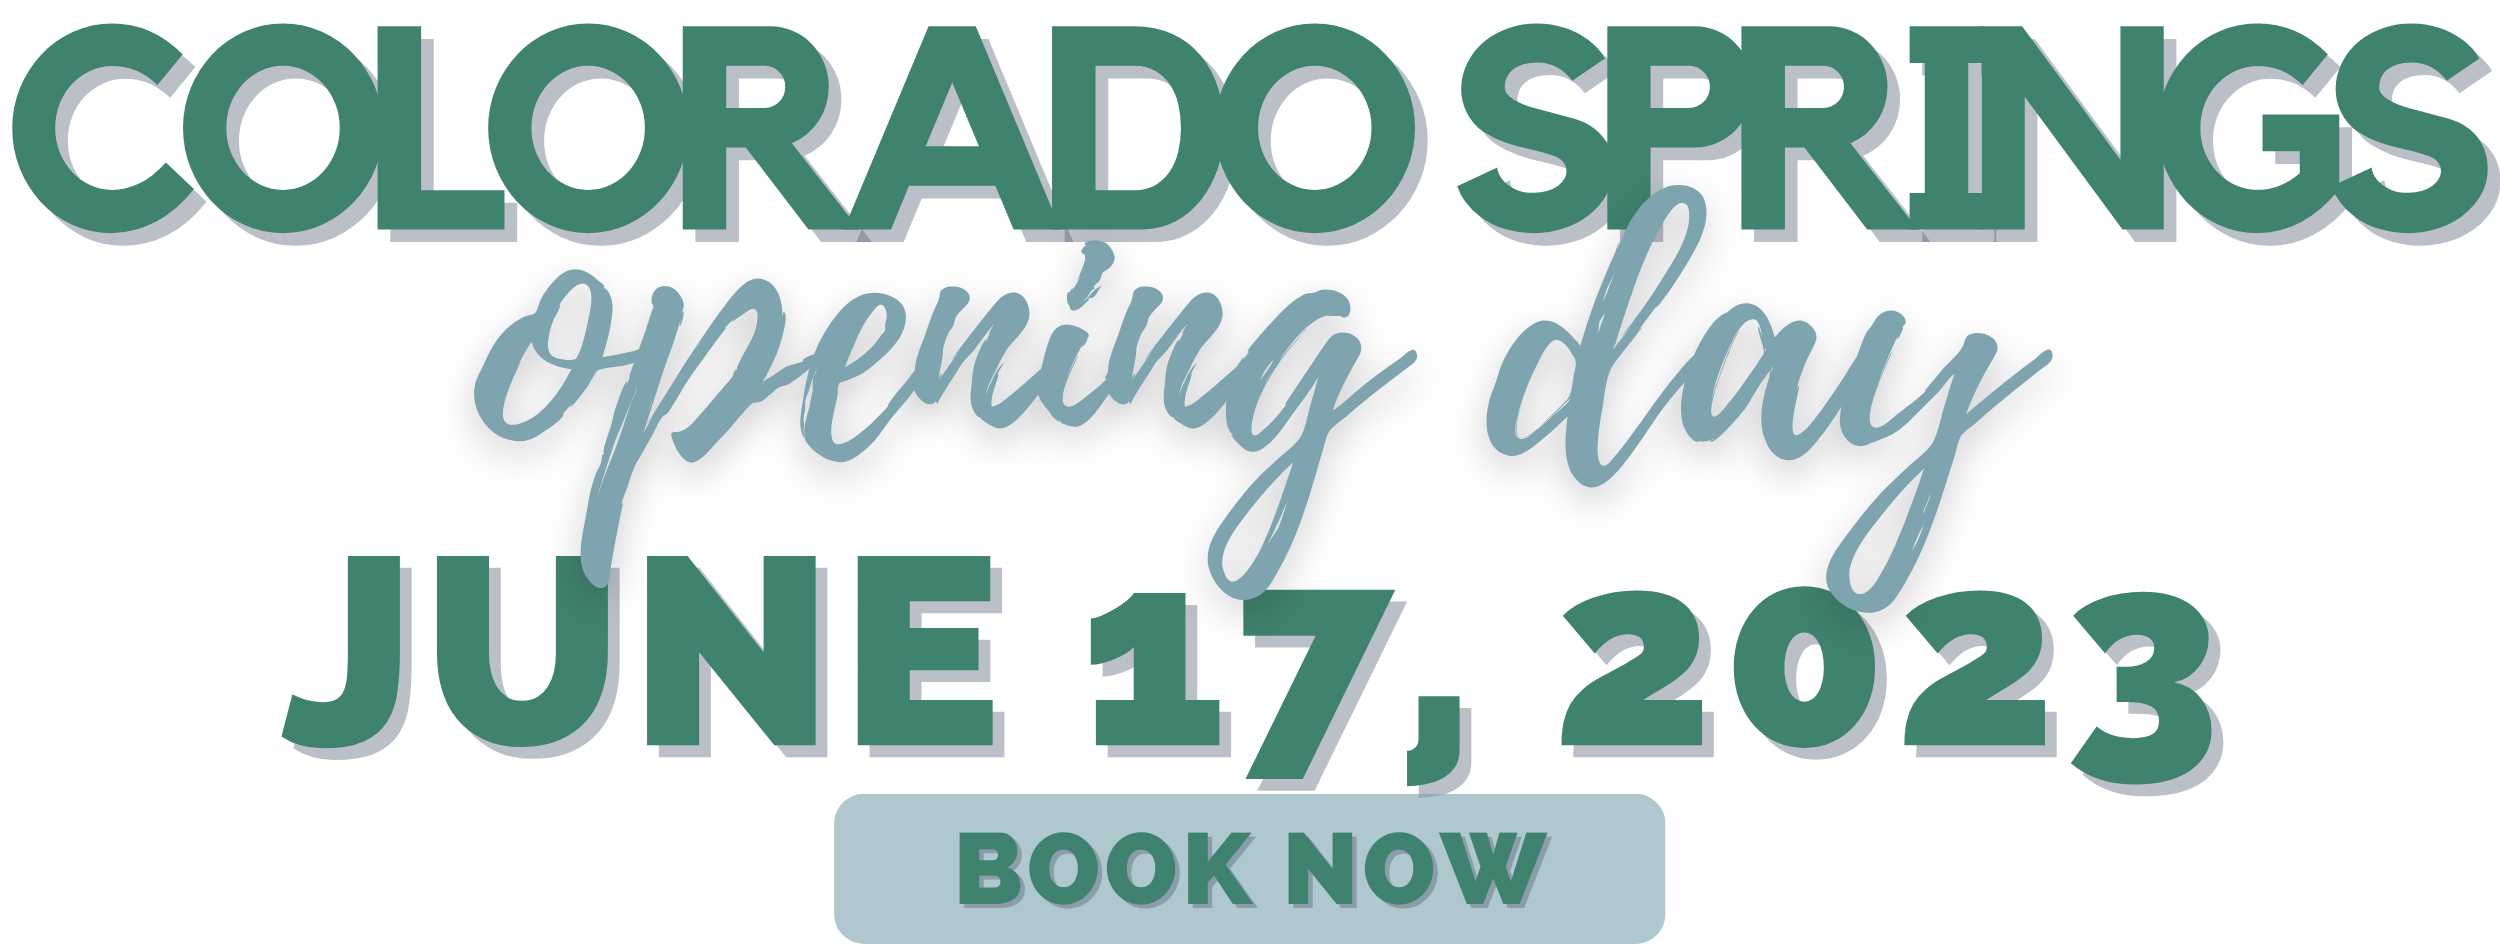 Colorado Springs | Opening Day June 17